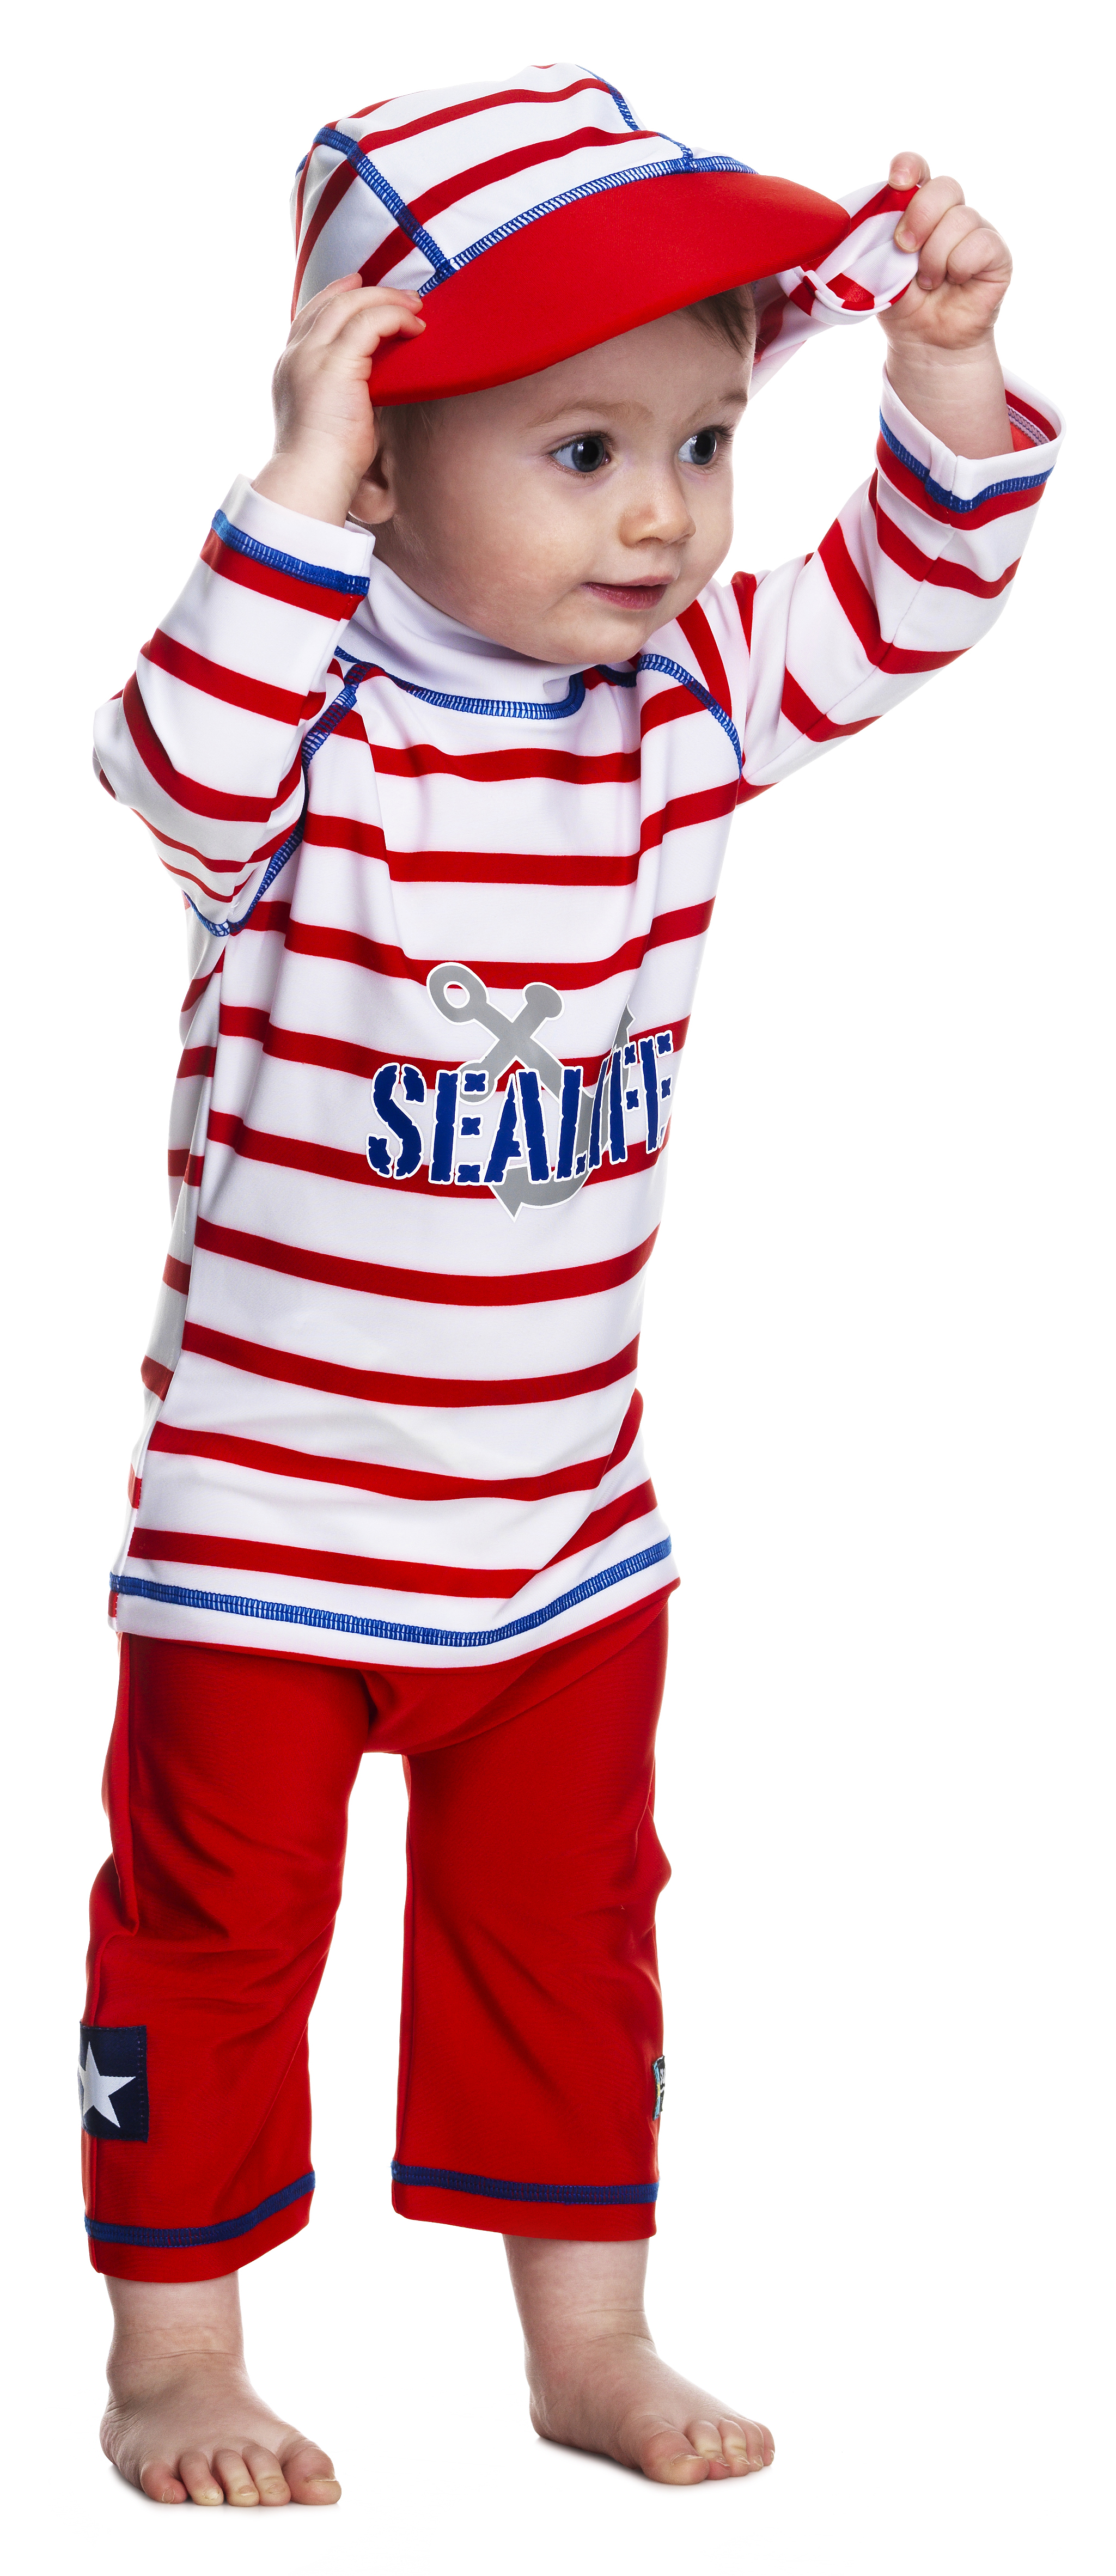 Costum de baie SeaLife red marime 86- 92 protectie UV Swimpy for Your BabyKids